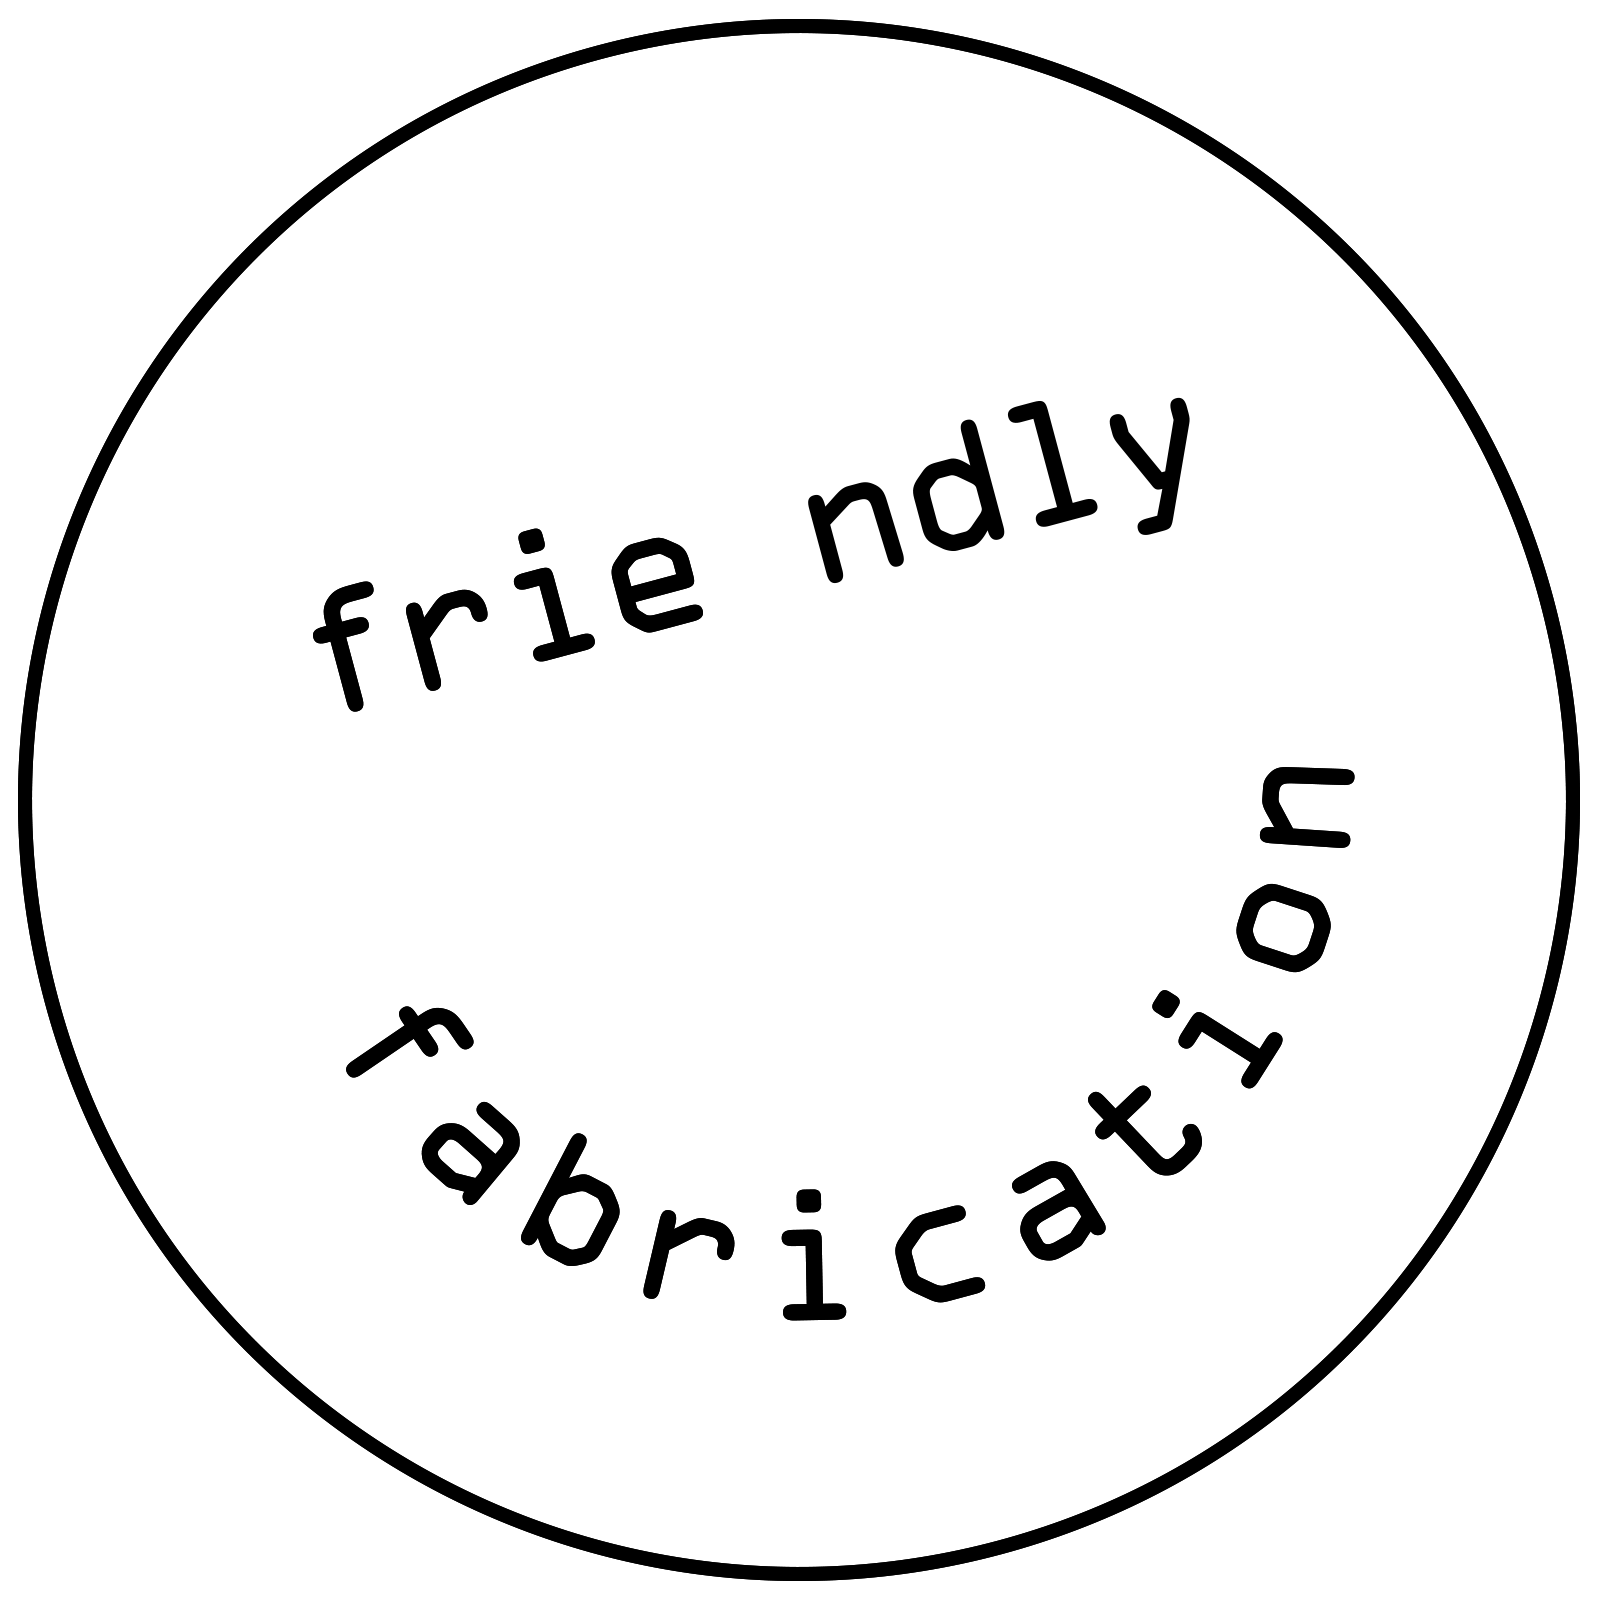 friendly fabrication